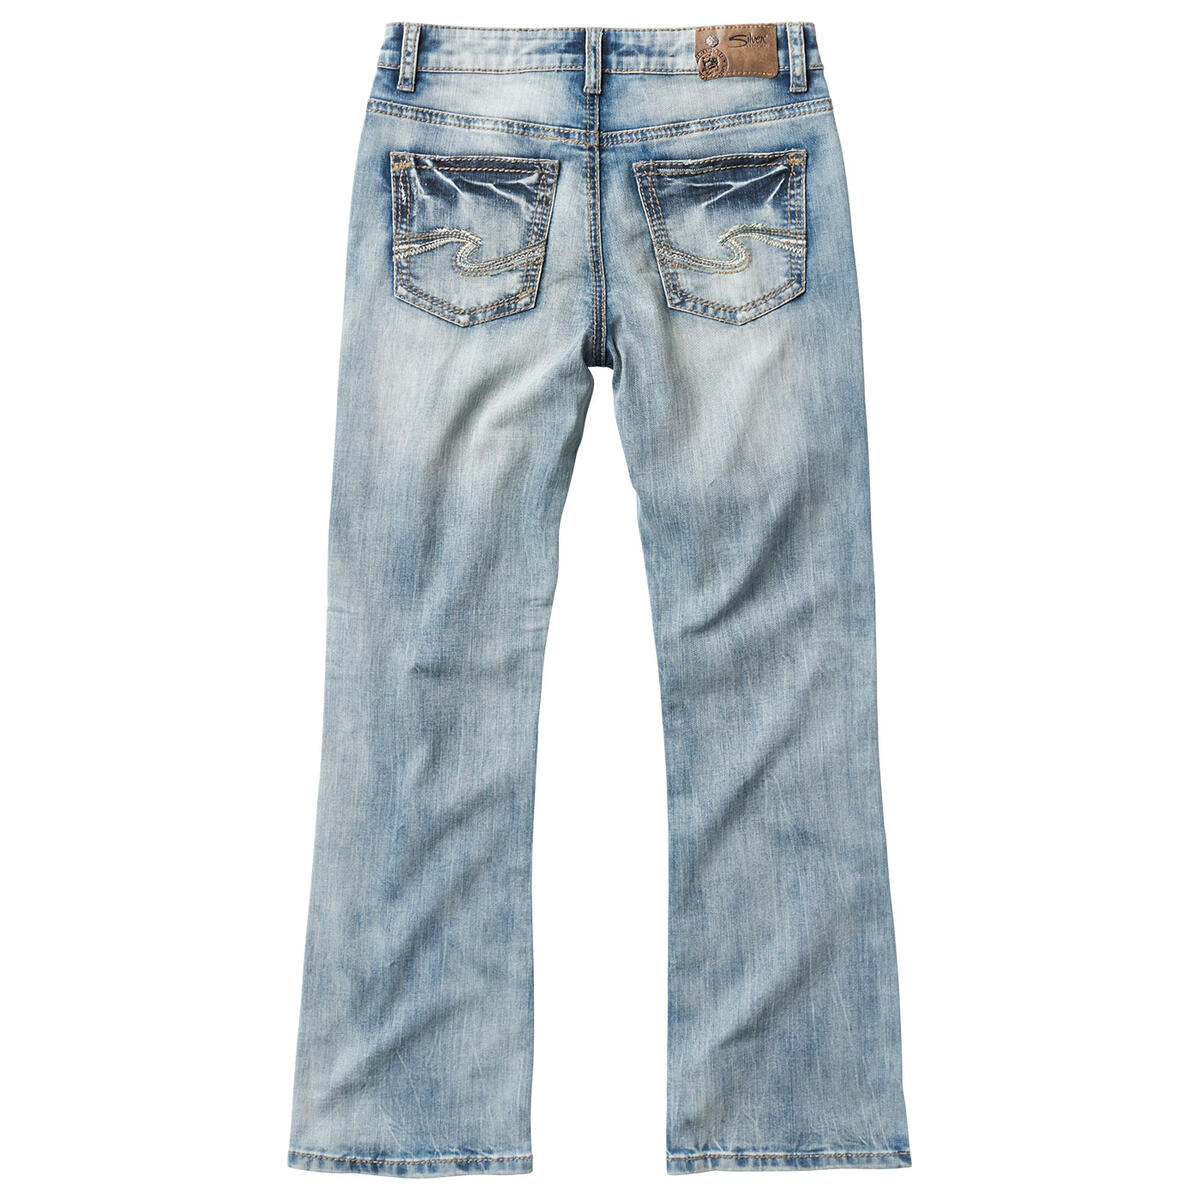 Zane Bootcut Jeans in Medium Wash (4-7), , hi-res image number 1